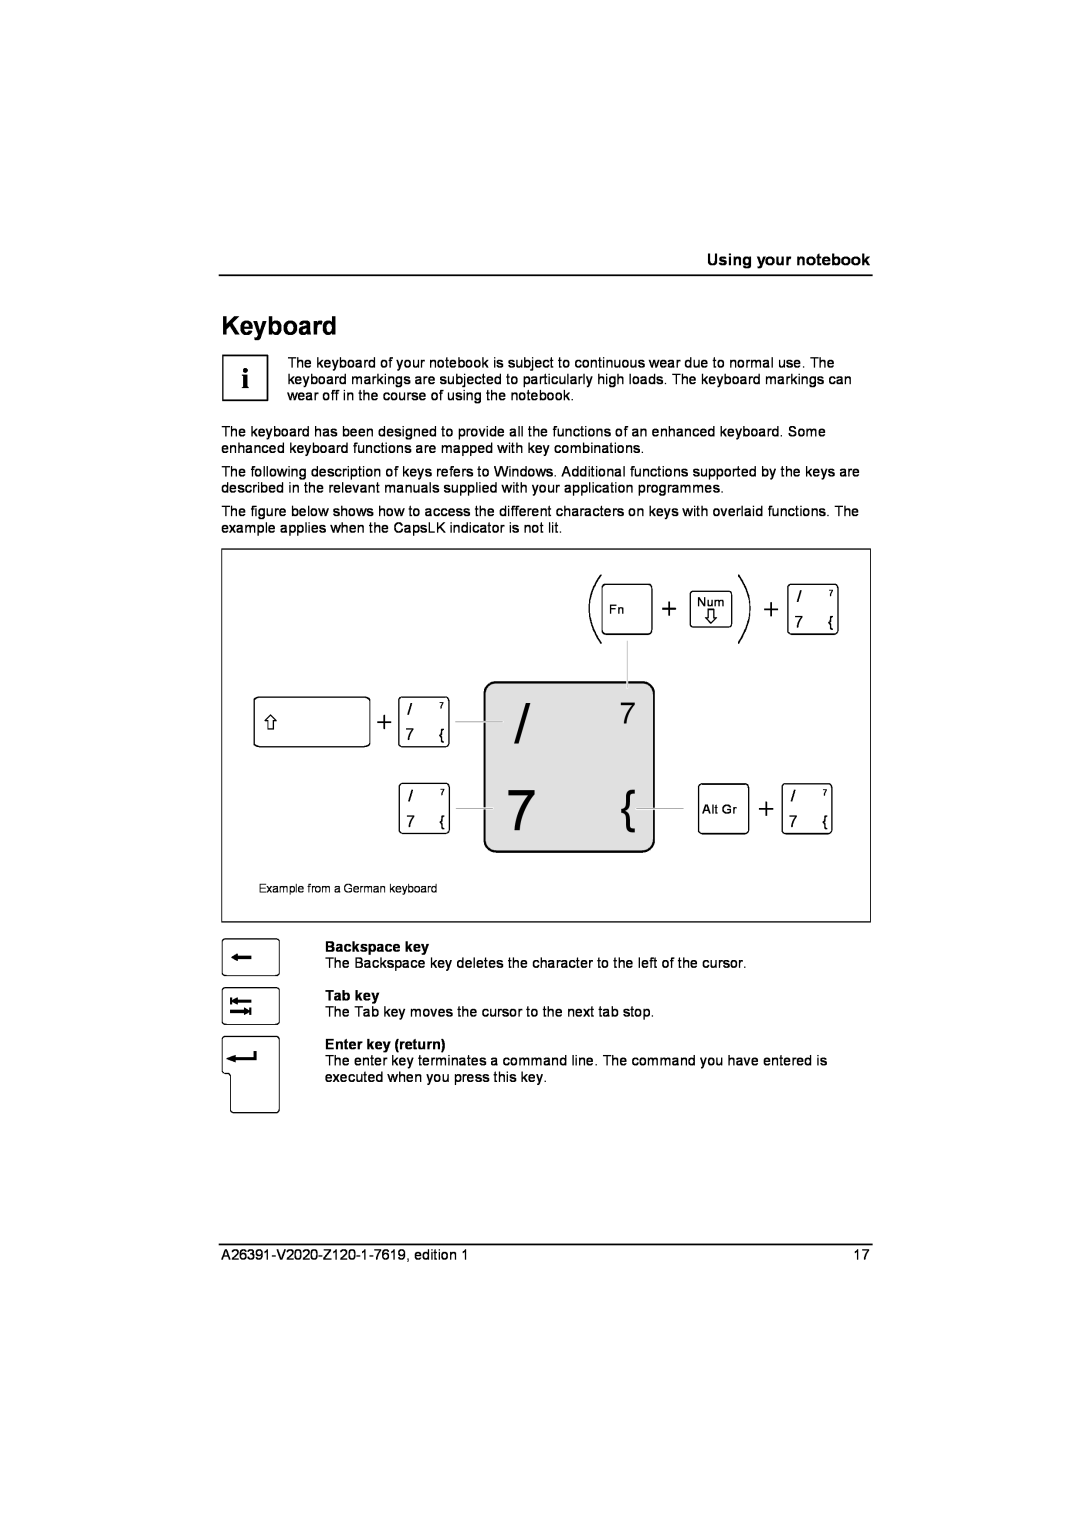 Fujitsu Siemens Computers V2020 manual Keyboard, Backspace key, Tab key, Enter key return, Using your notebook 